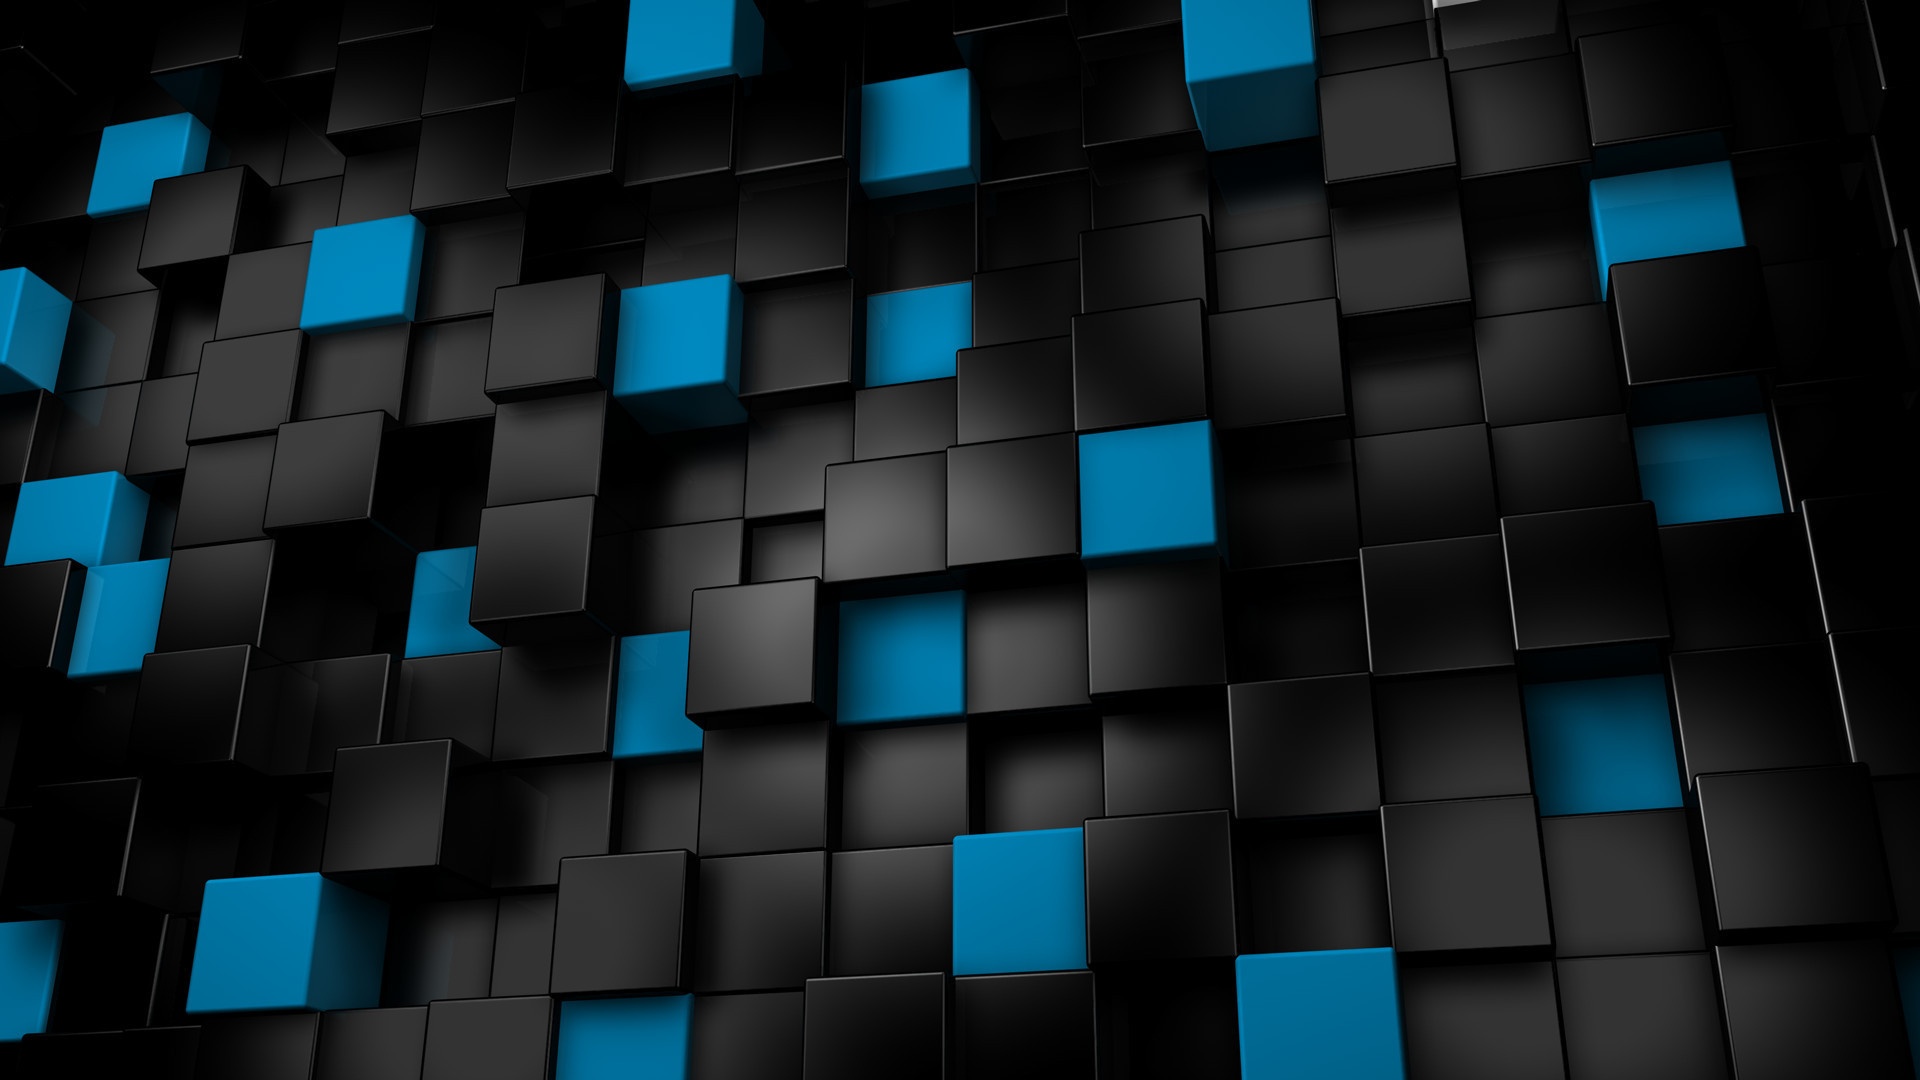 Blue And Black Ford Wallpaper Background HDblackwallpaper